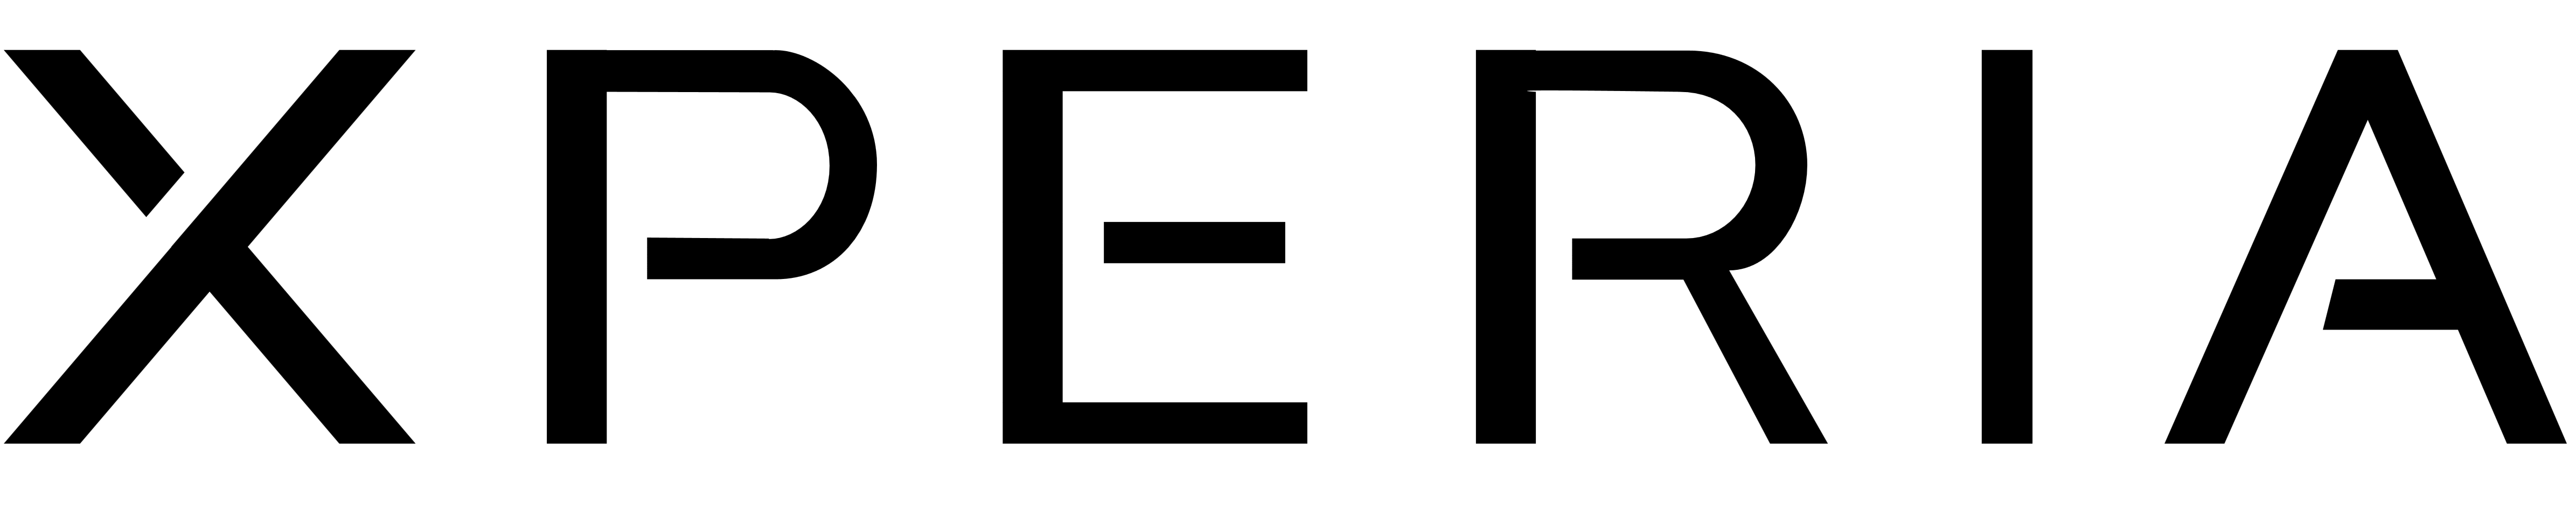 Xperia Logo - Xperia – Logos Download